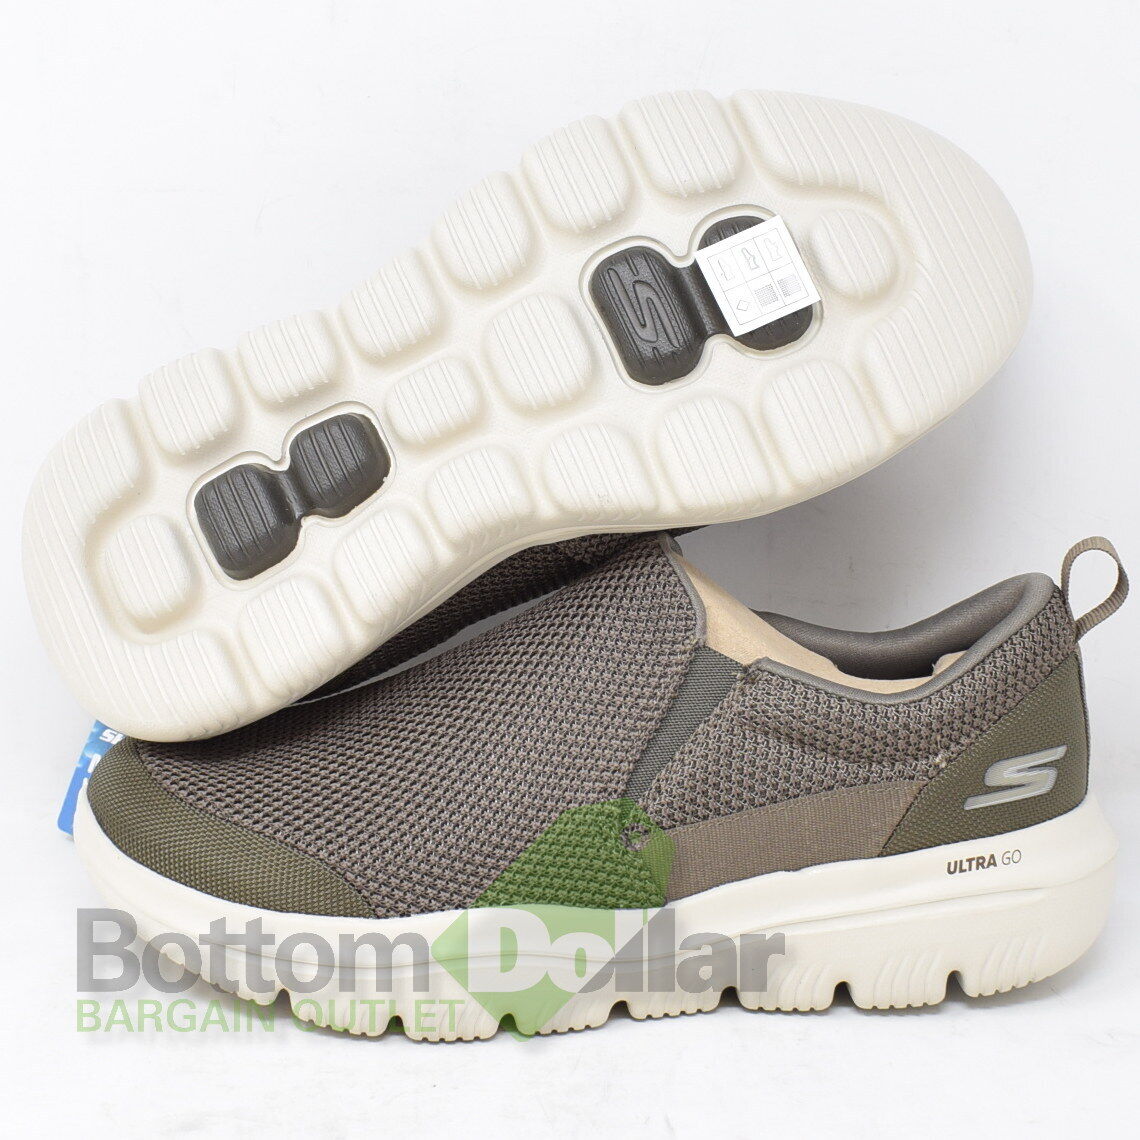 Skechers GOwalk Evolution Ultra -Impeccable Shoes Khaki | eBay